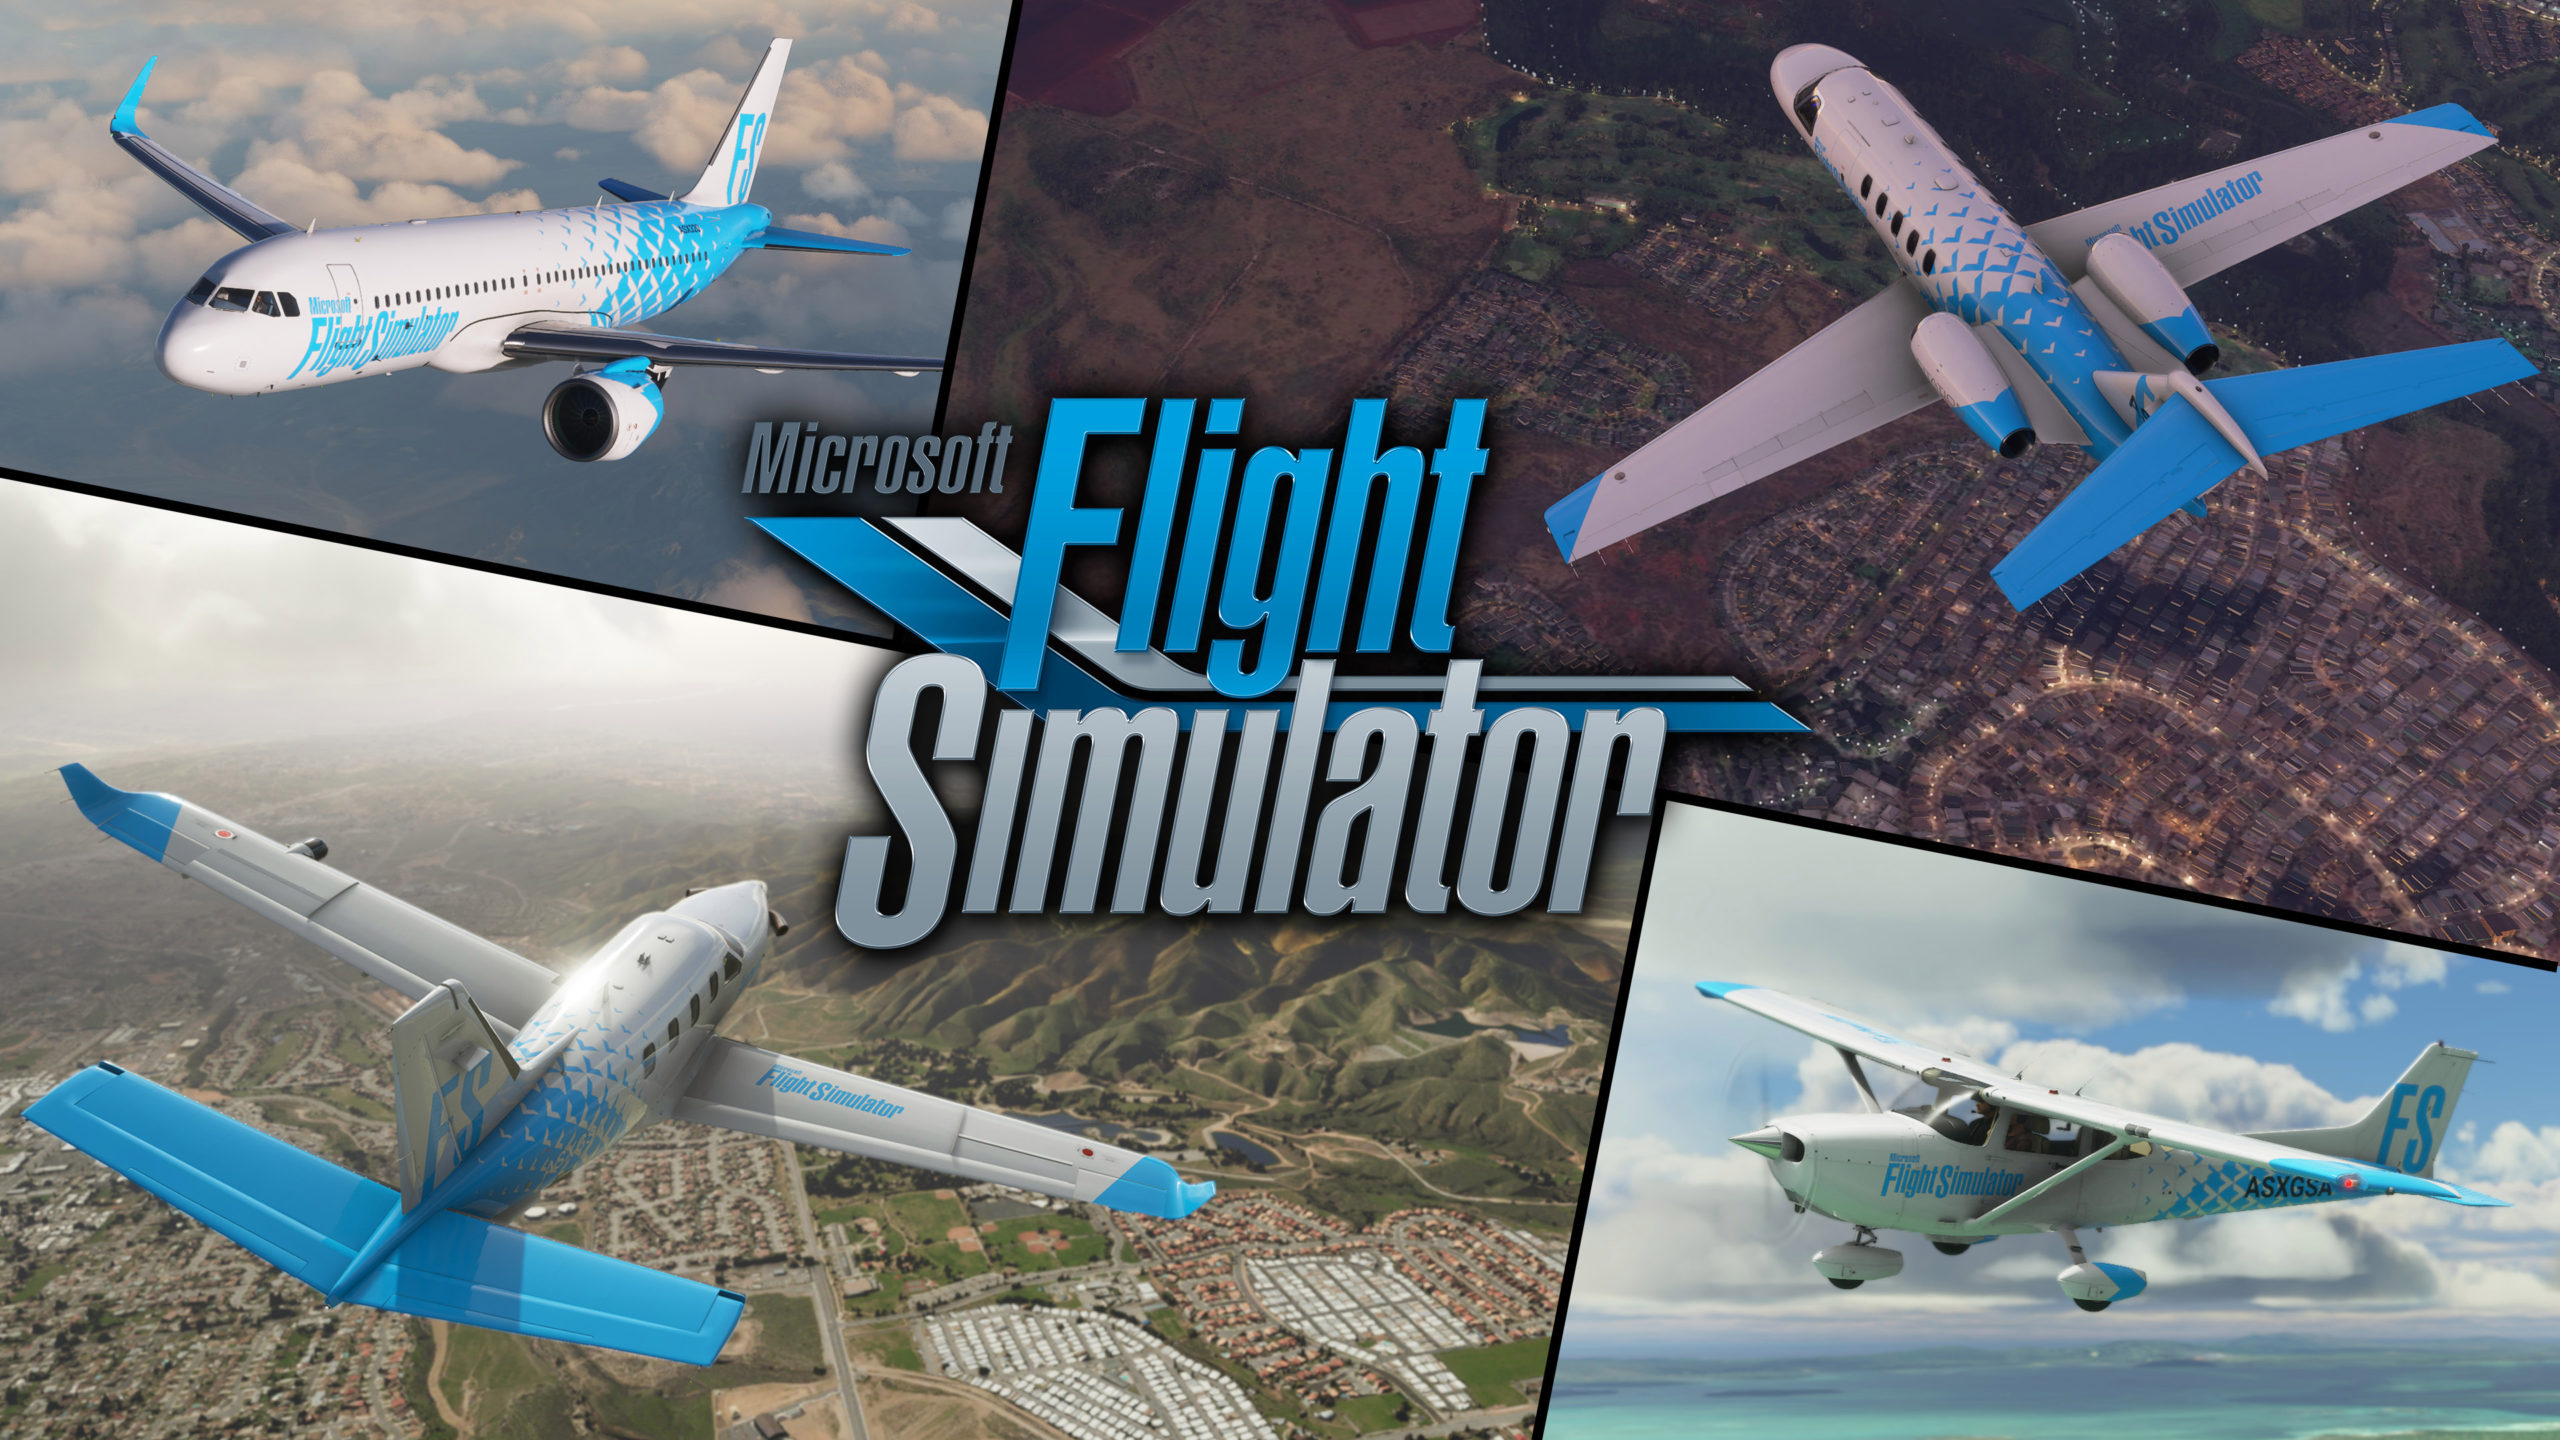 free download microsoft flight simulator 2015